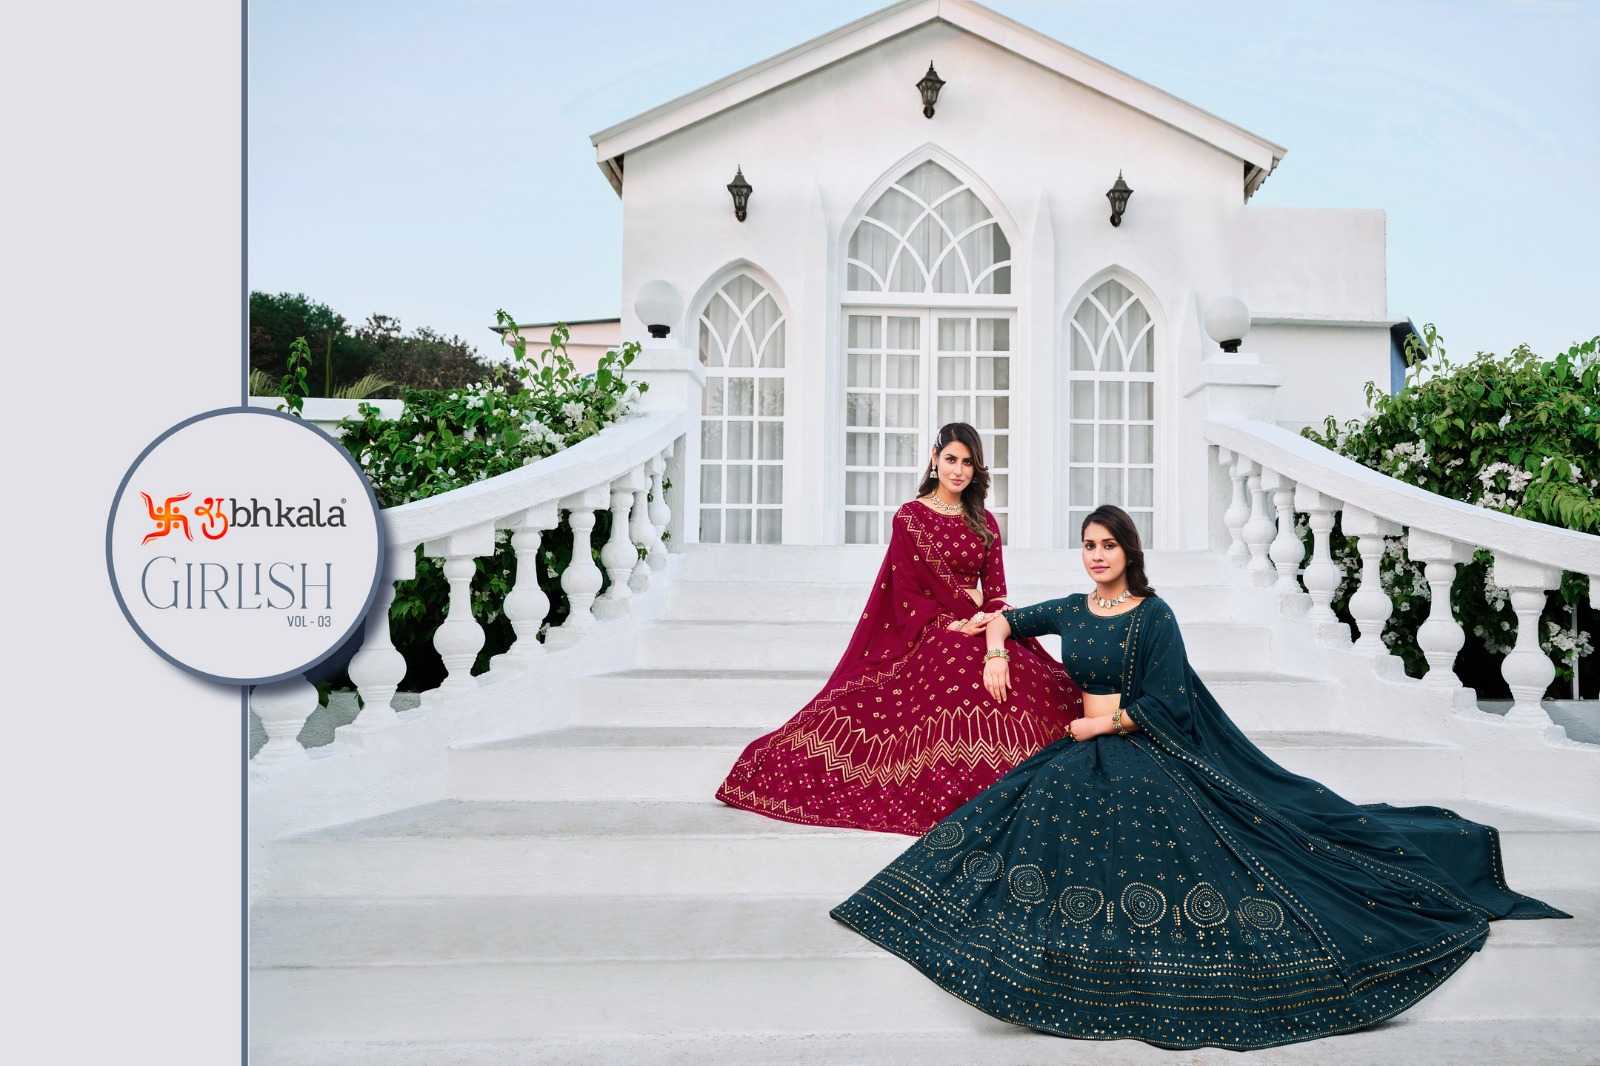 subhkala girlish vol 3 161-169 designer semistitch occasion wear lehenga choli dupatta